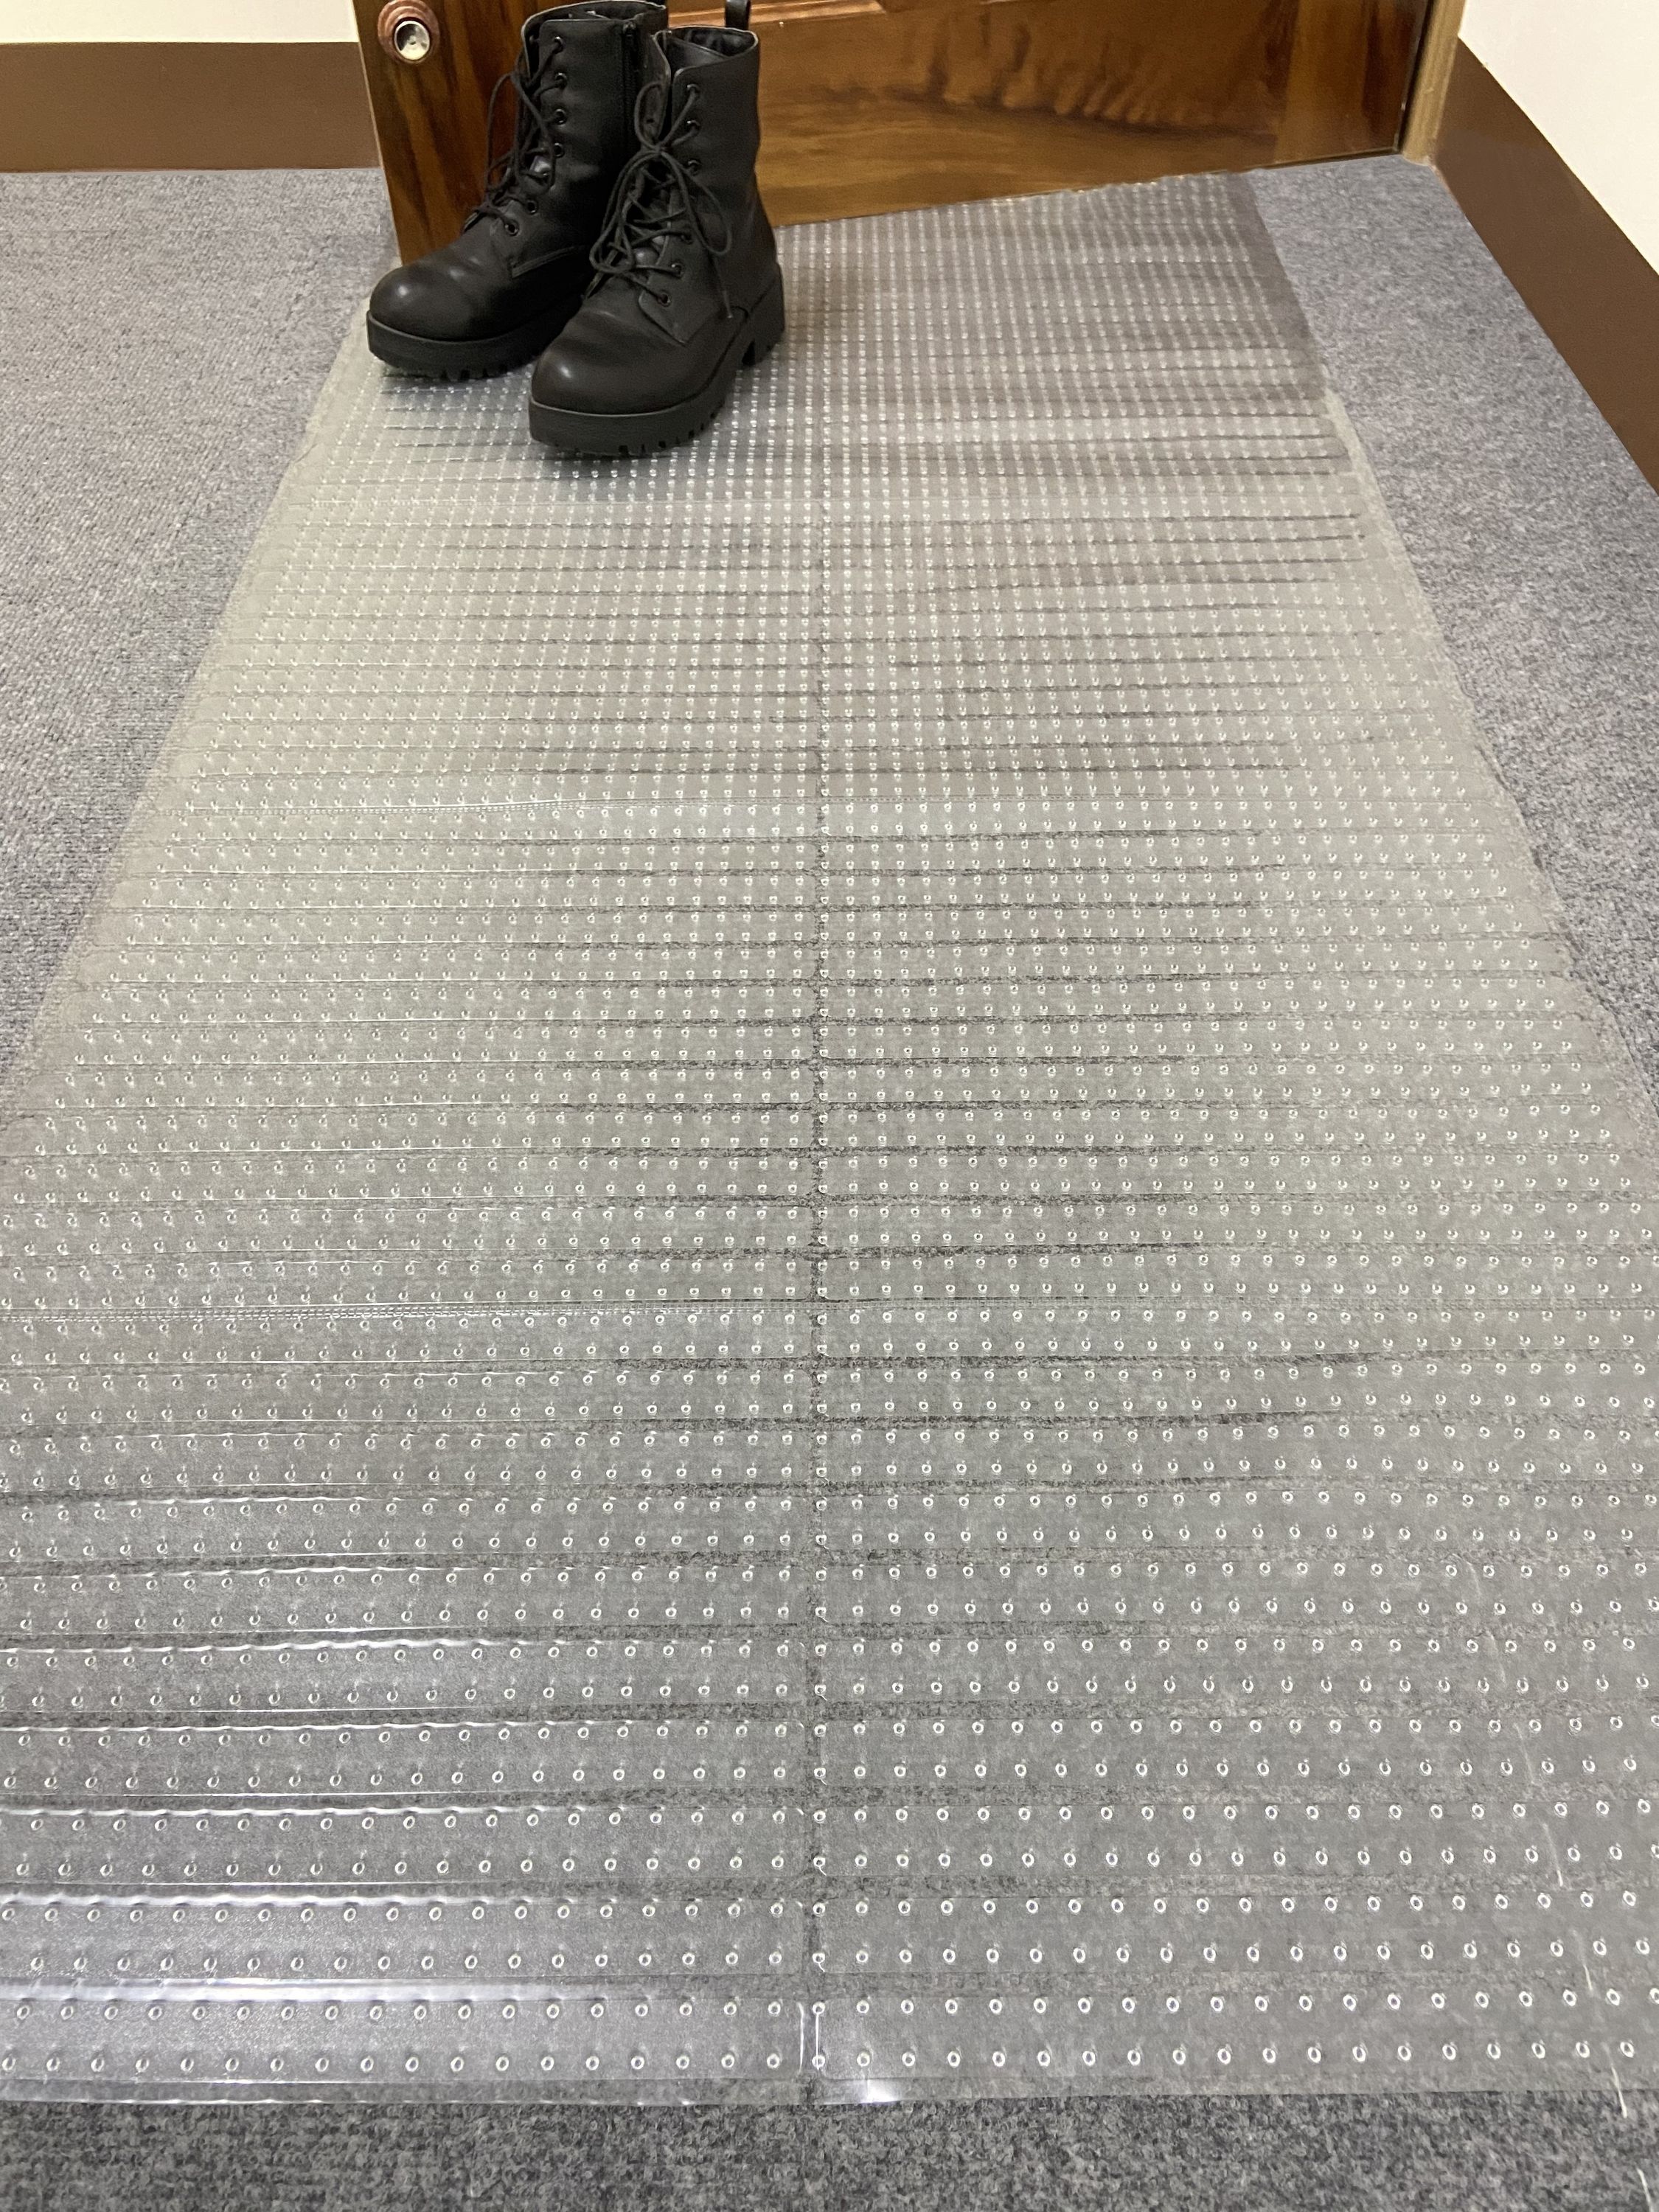 Clear Plastic Runner Rug Carpet Protector Mat Ribbed Multi Grip. 26in X 50FT 